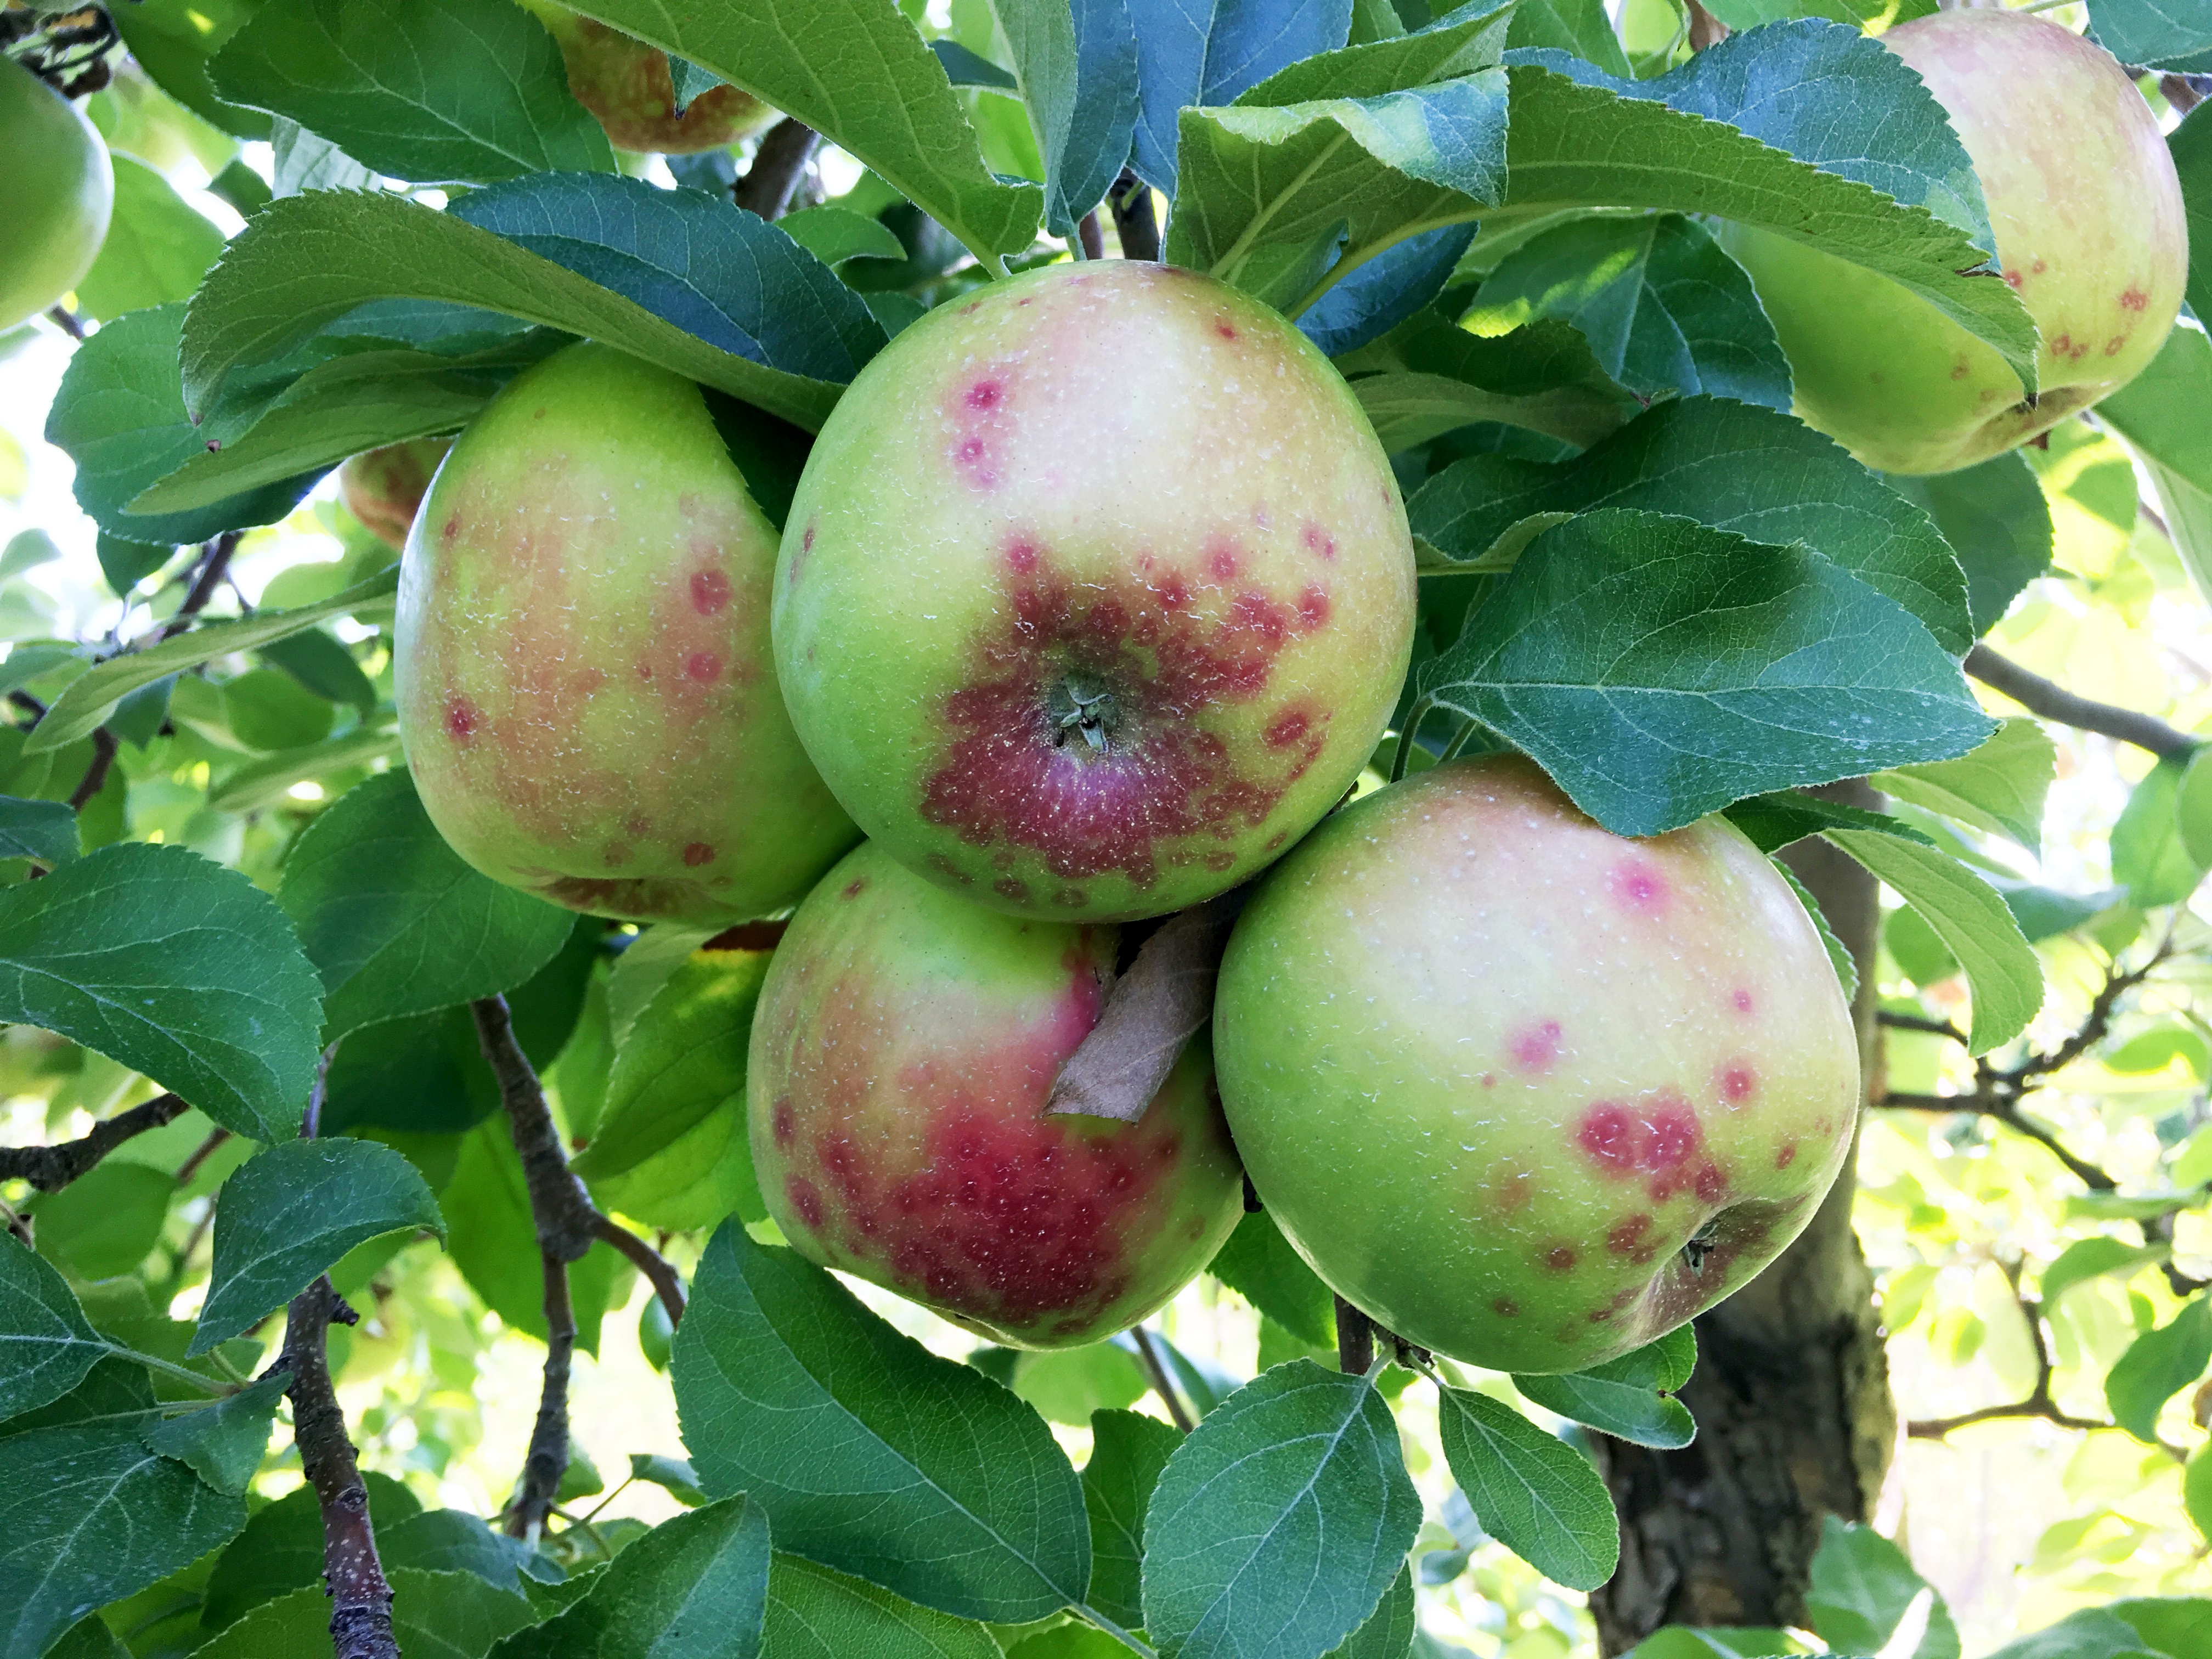 San Jose Scale on apples? - General Fruit Growing - Growing Fruit